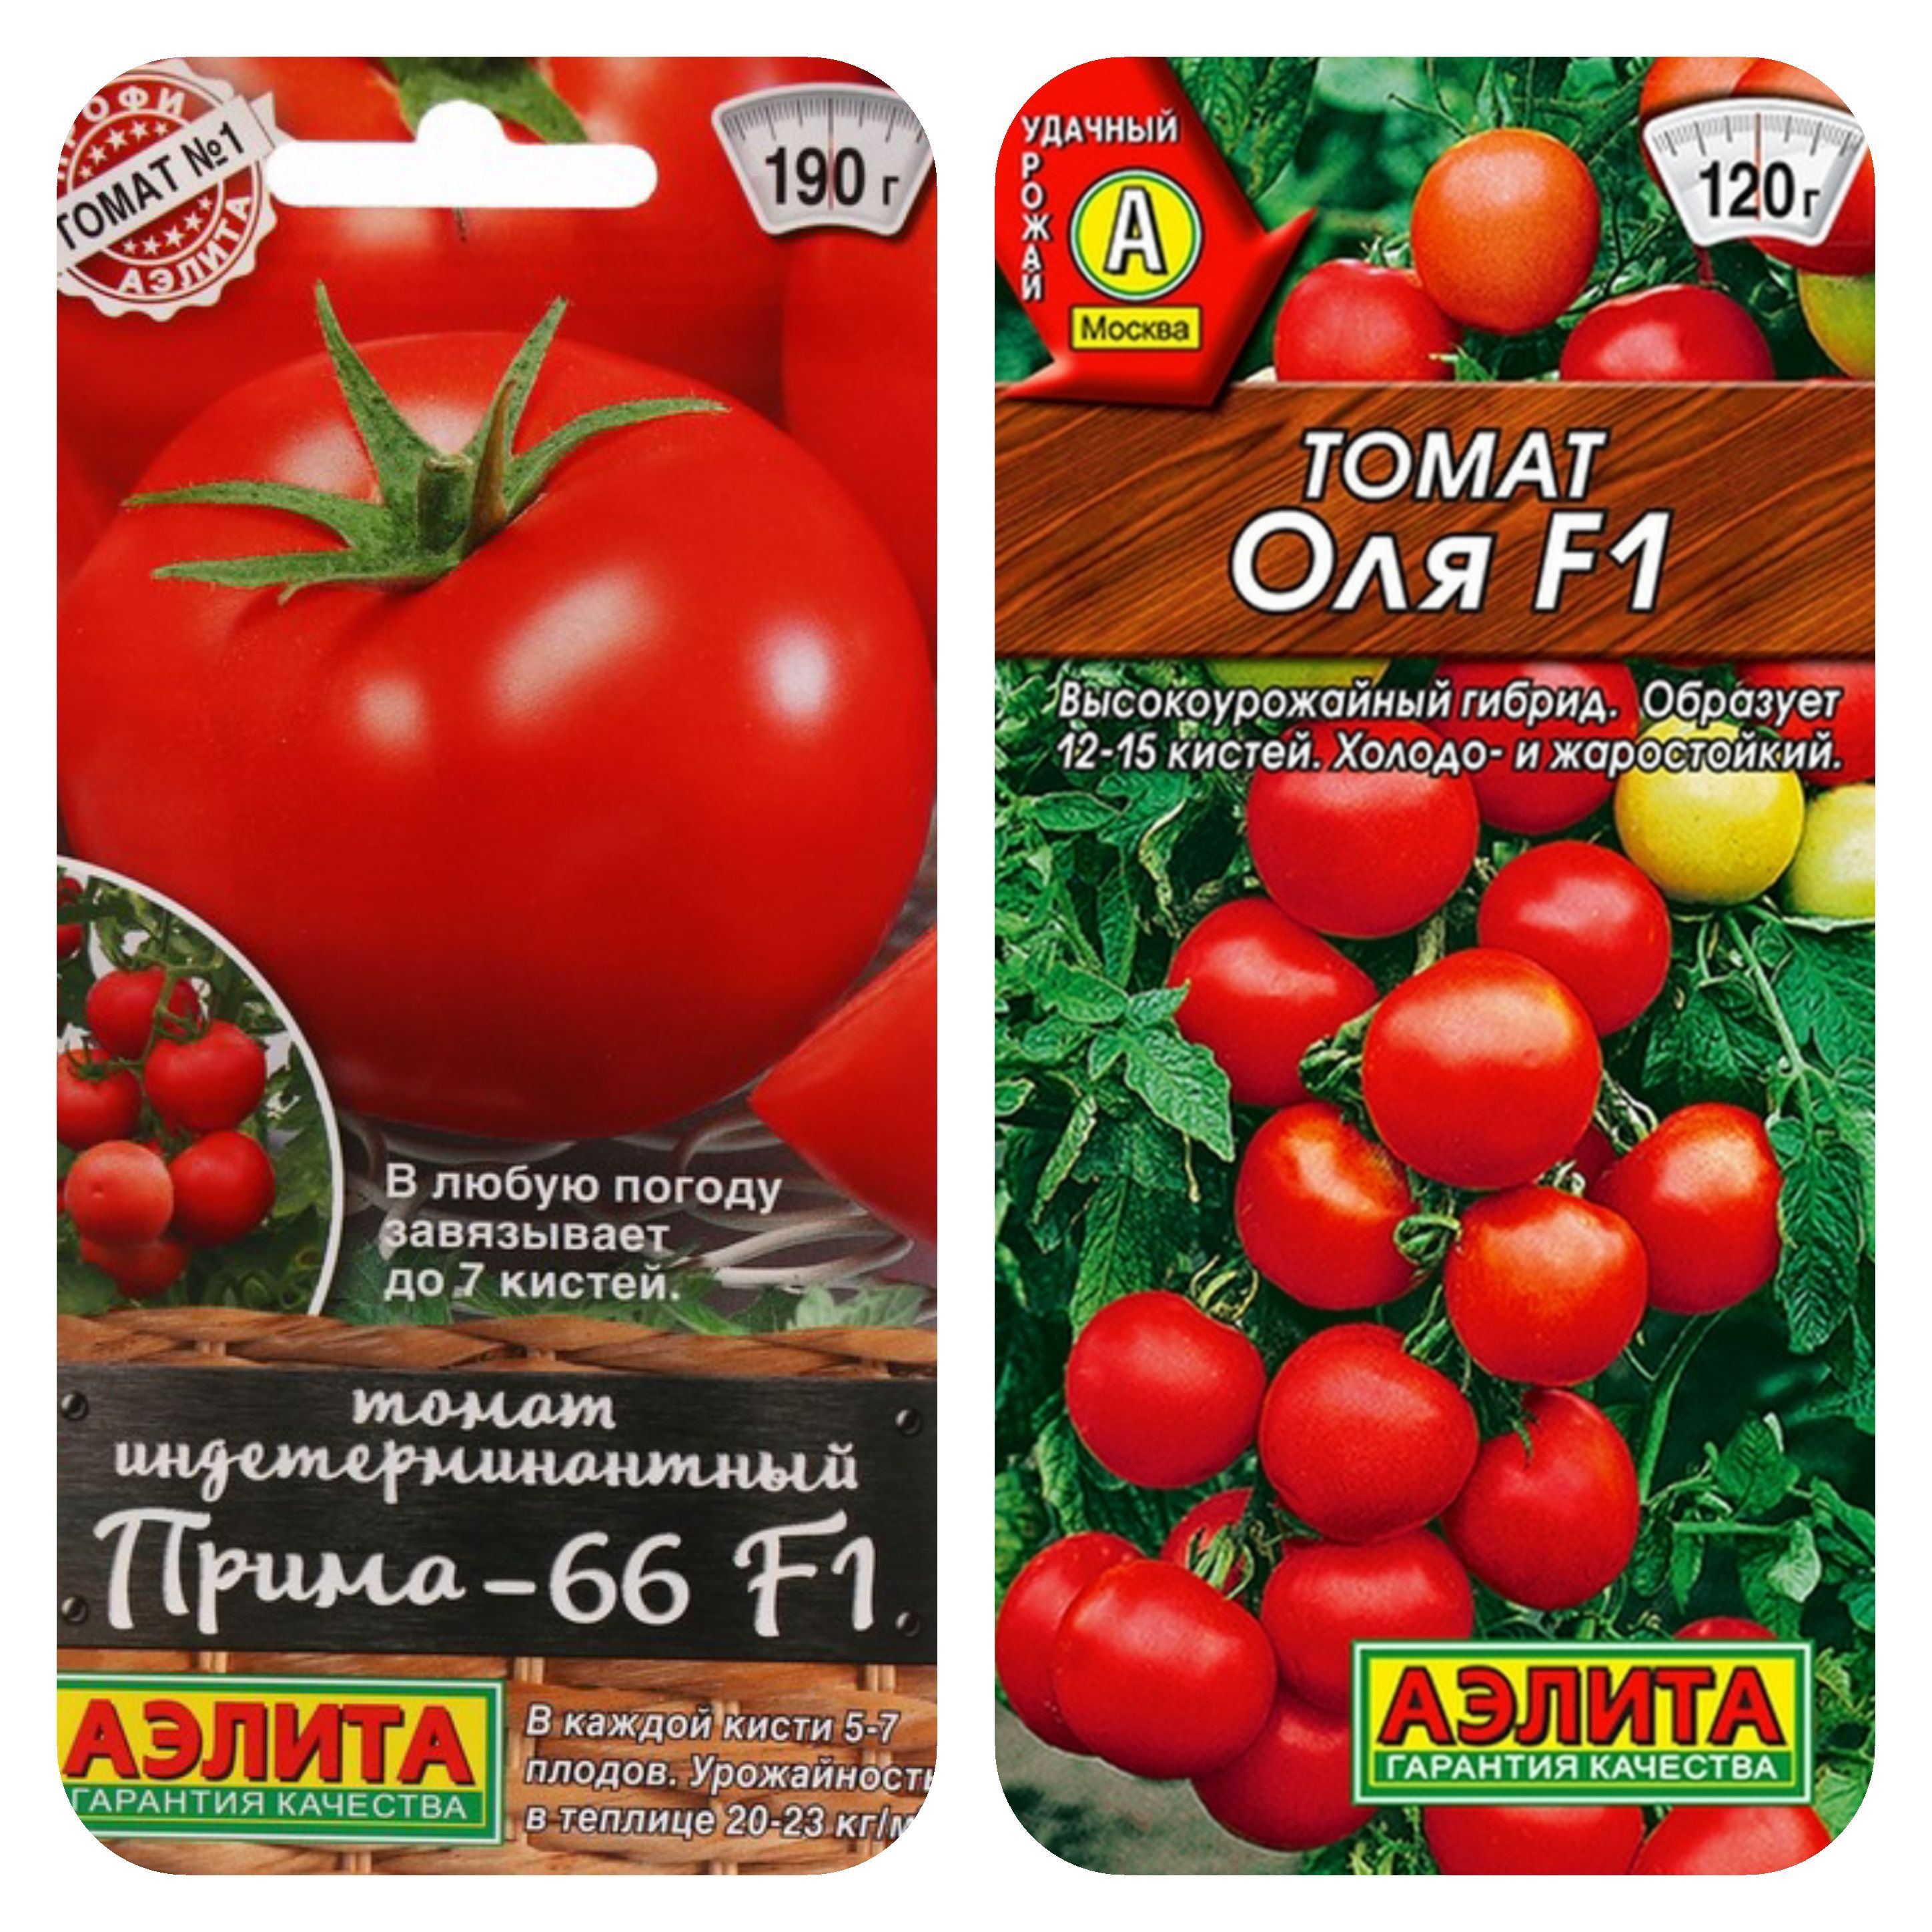 Сорт томатов оля f1 отзывы. Томат Прима-66 f1. Томат Оля f1. Томат Бриксол f1.